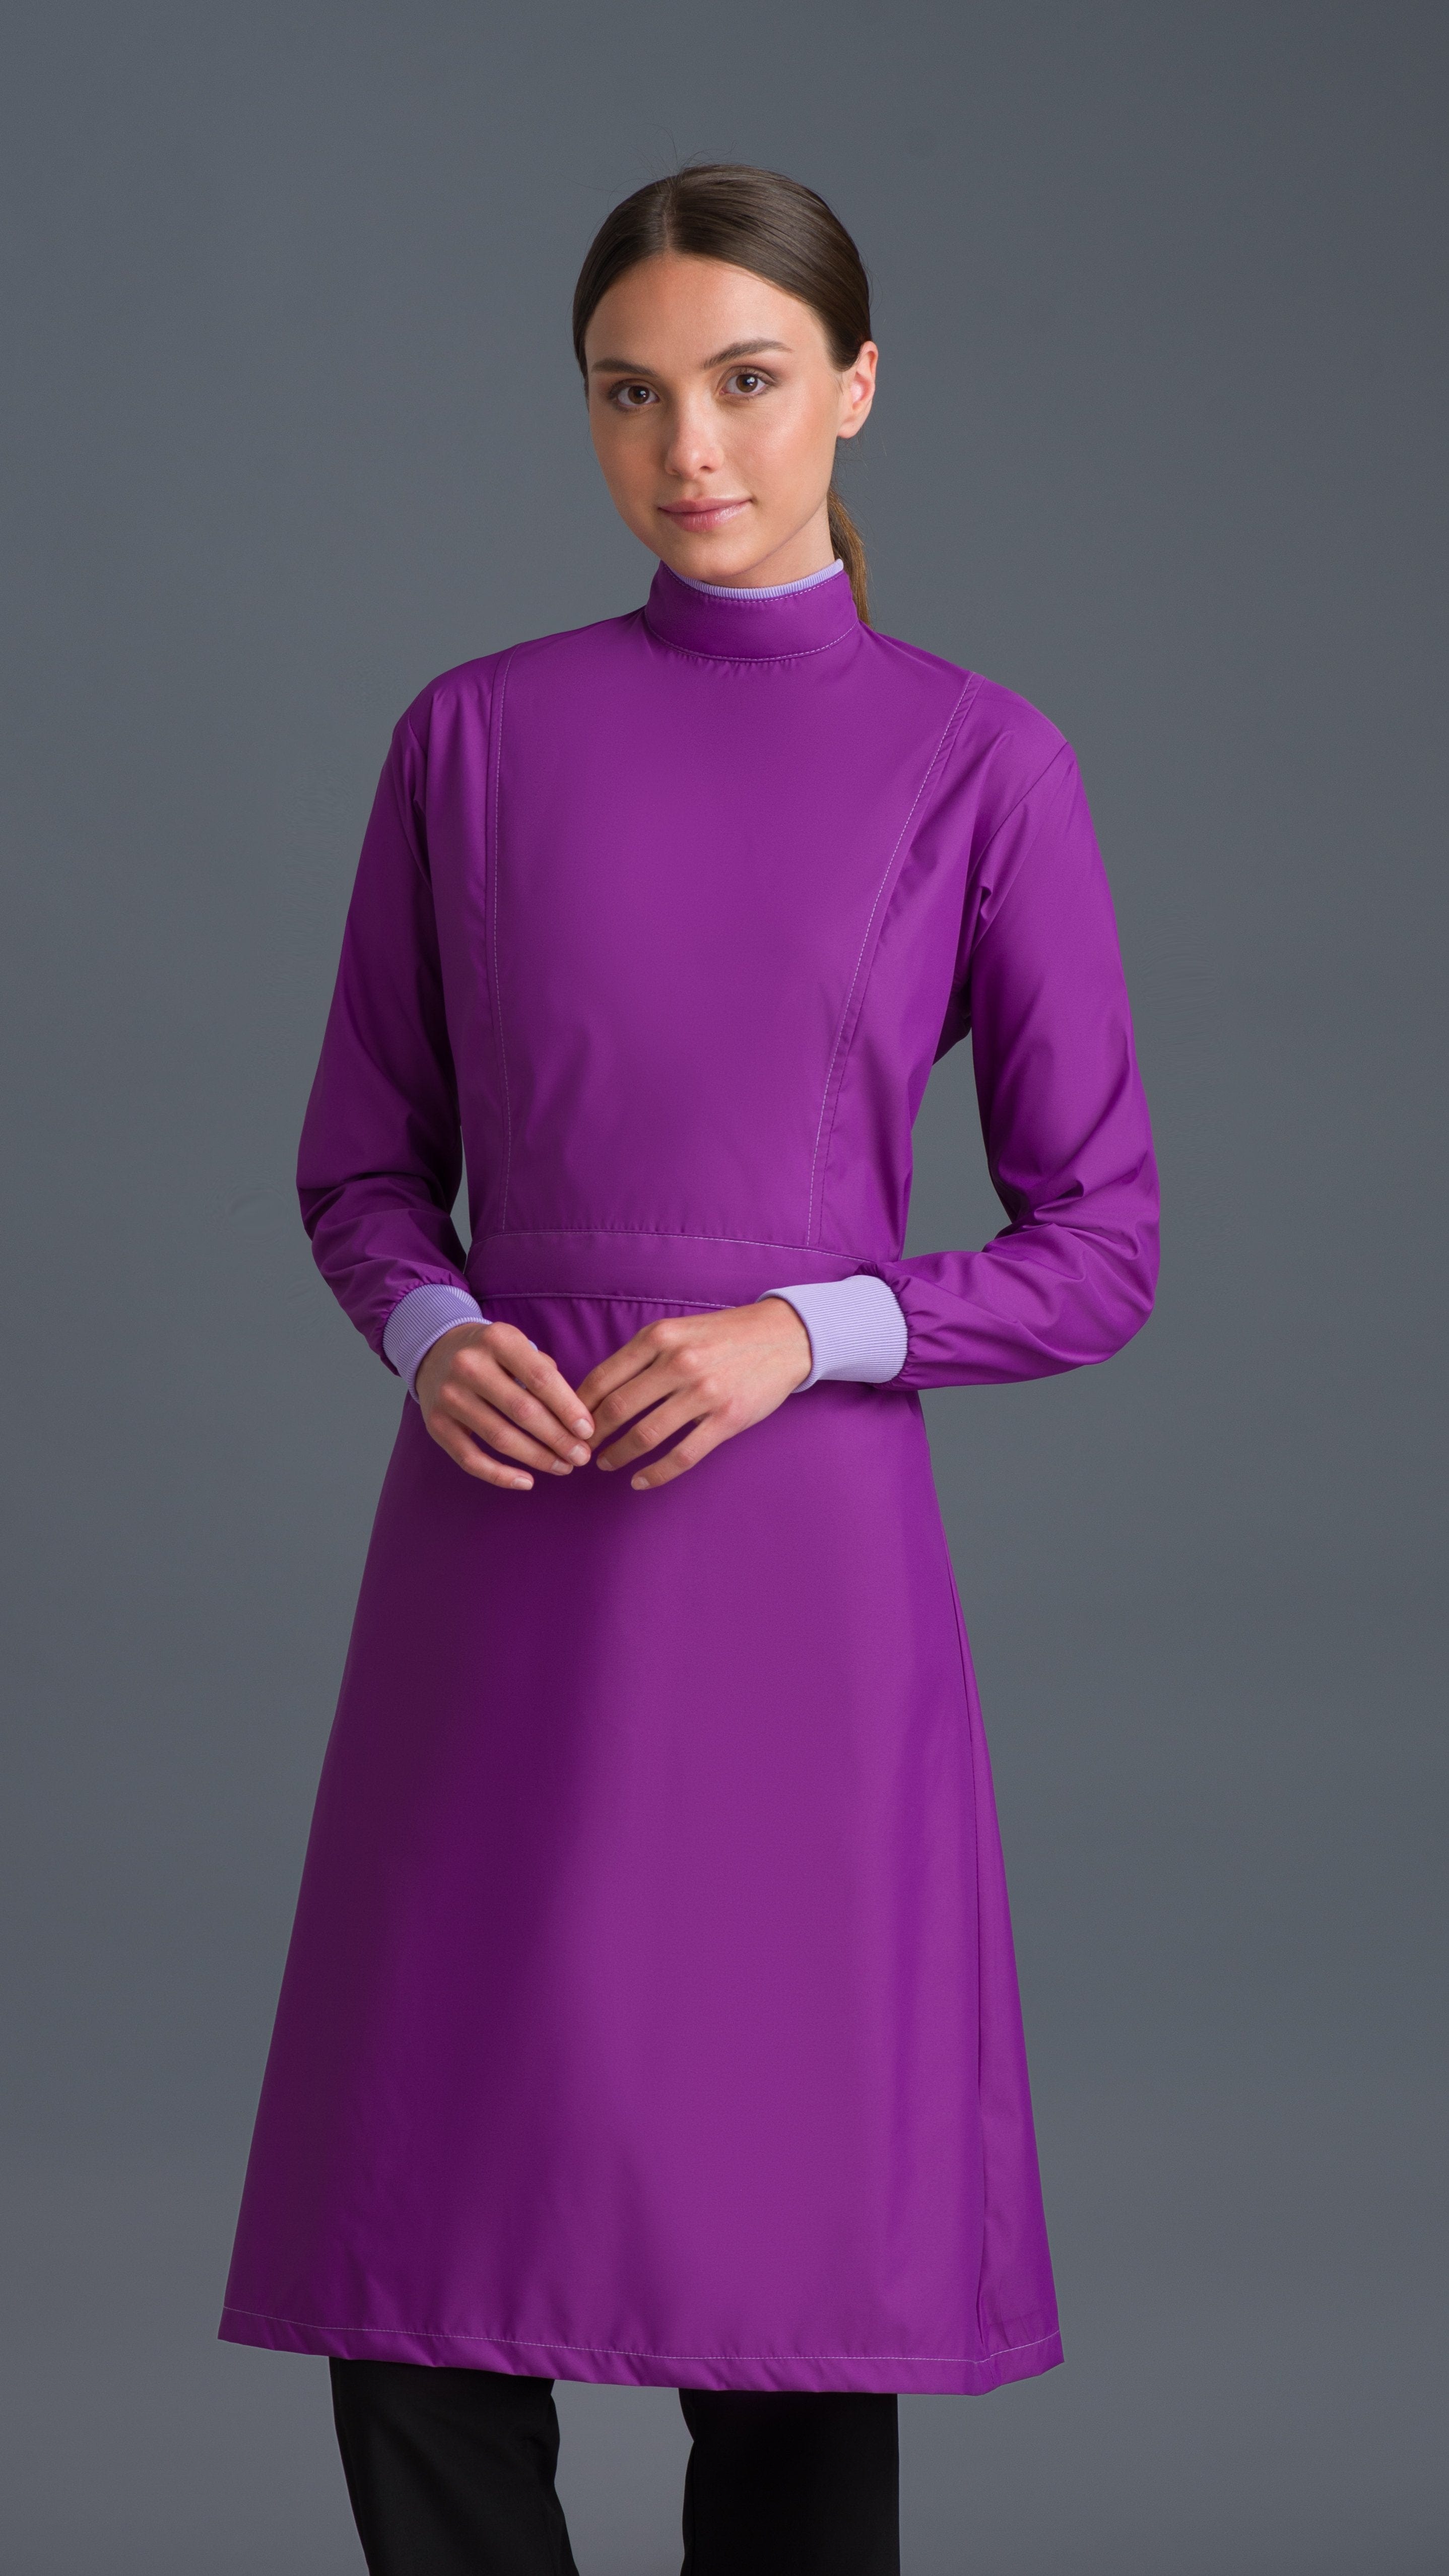 Kanaus® Coat Pro Bright Violet | Dama - Kanaus